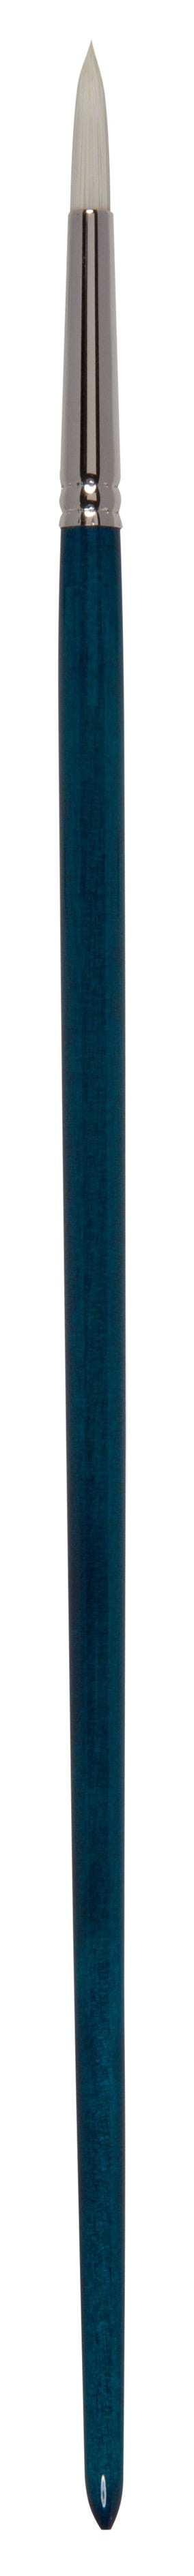 Zahn Acrylic Brush Round, Infinity, 9975 Size 10